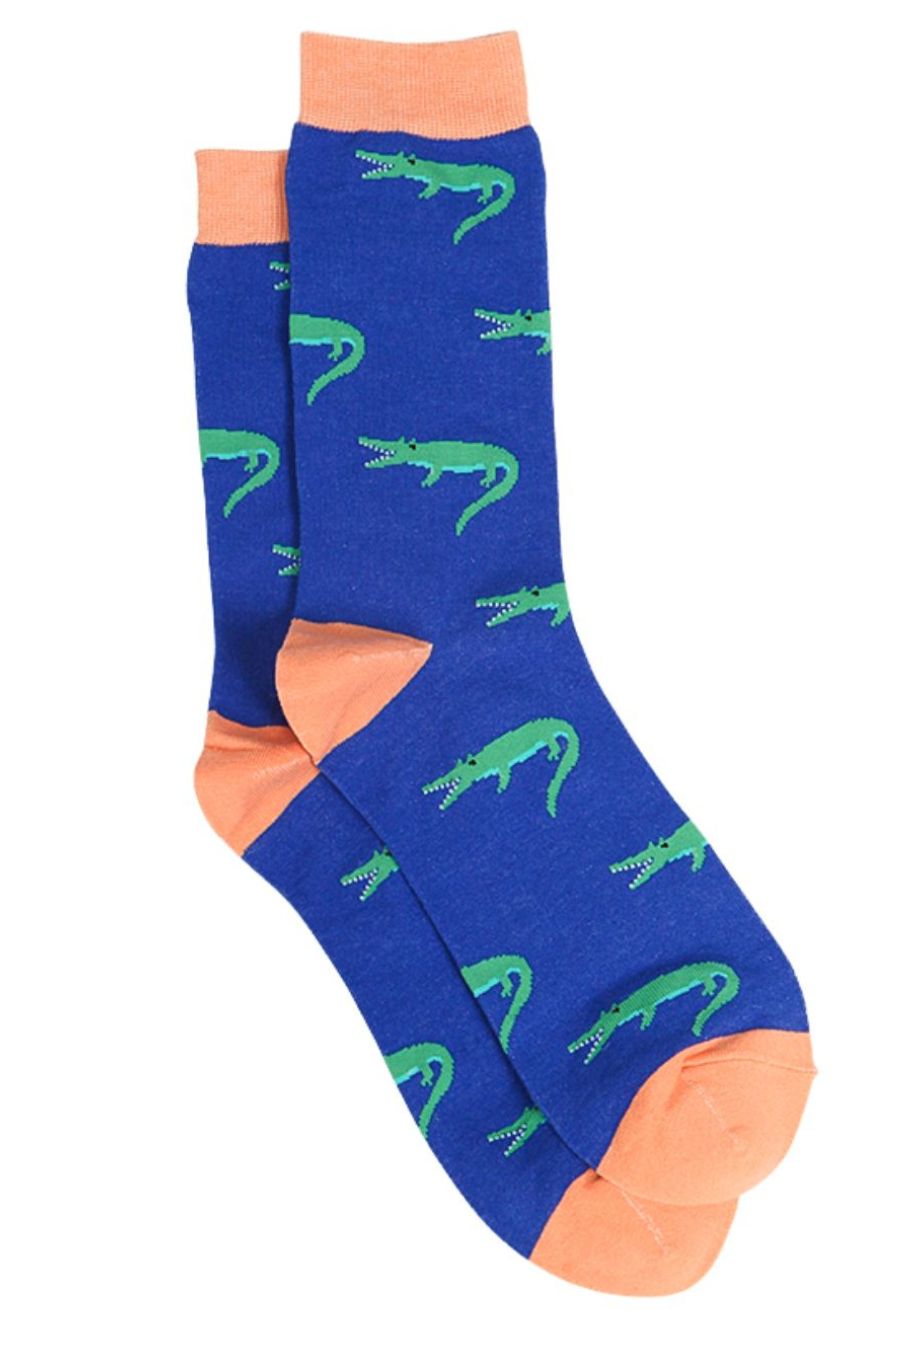 blue dress socks with green crocodiles 